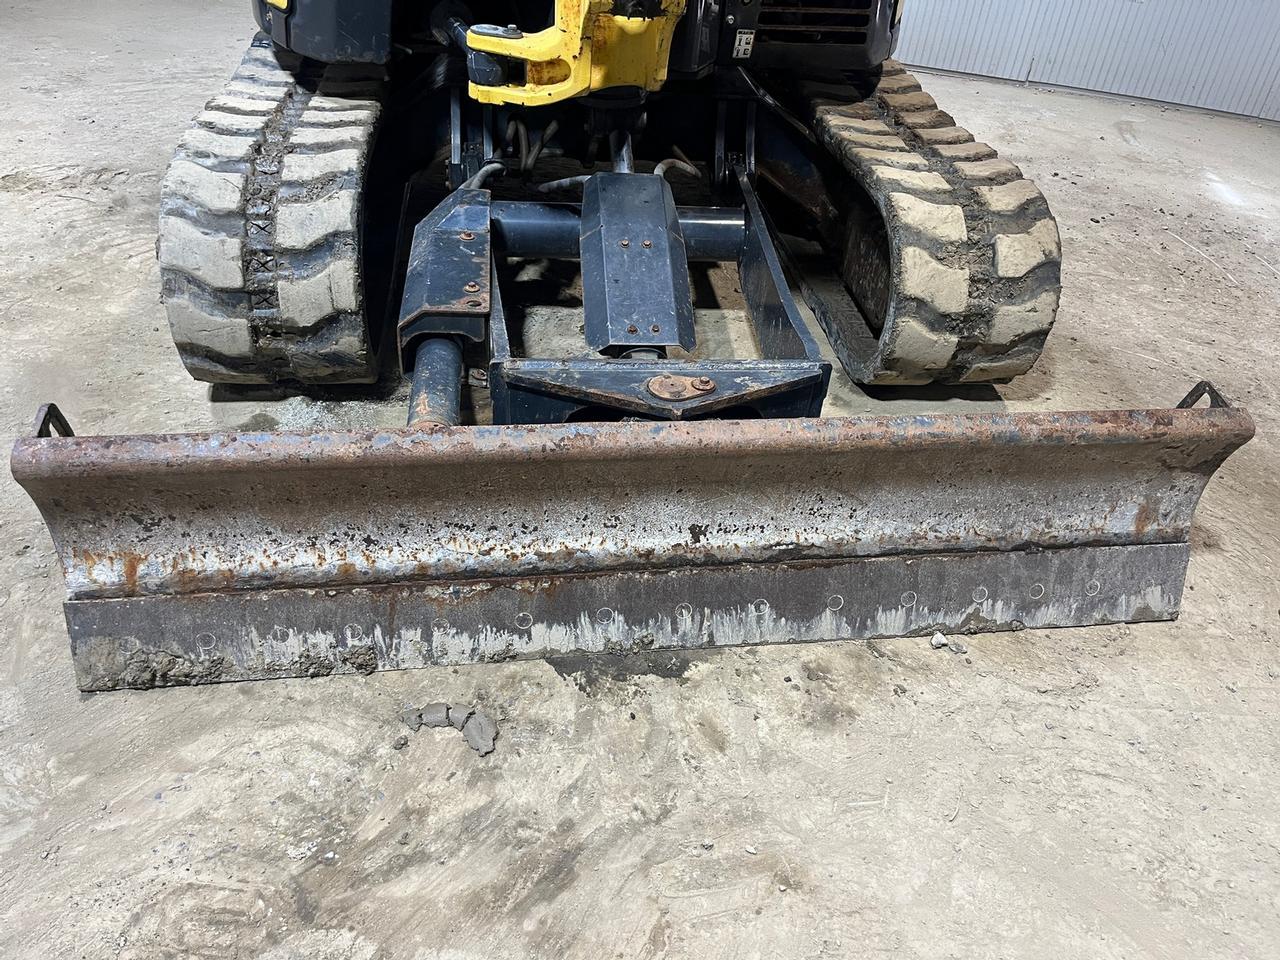 2018 Yanmar VIO55-6A Mini Excavator